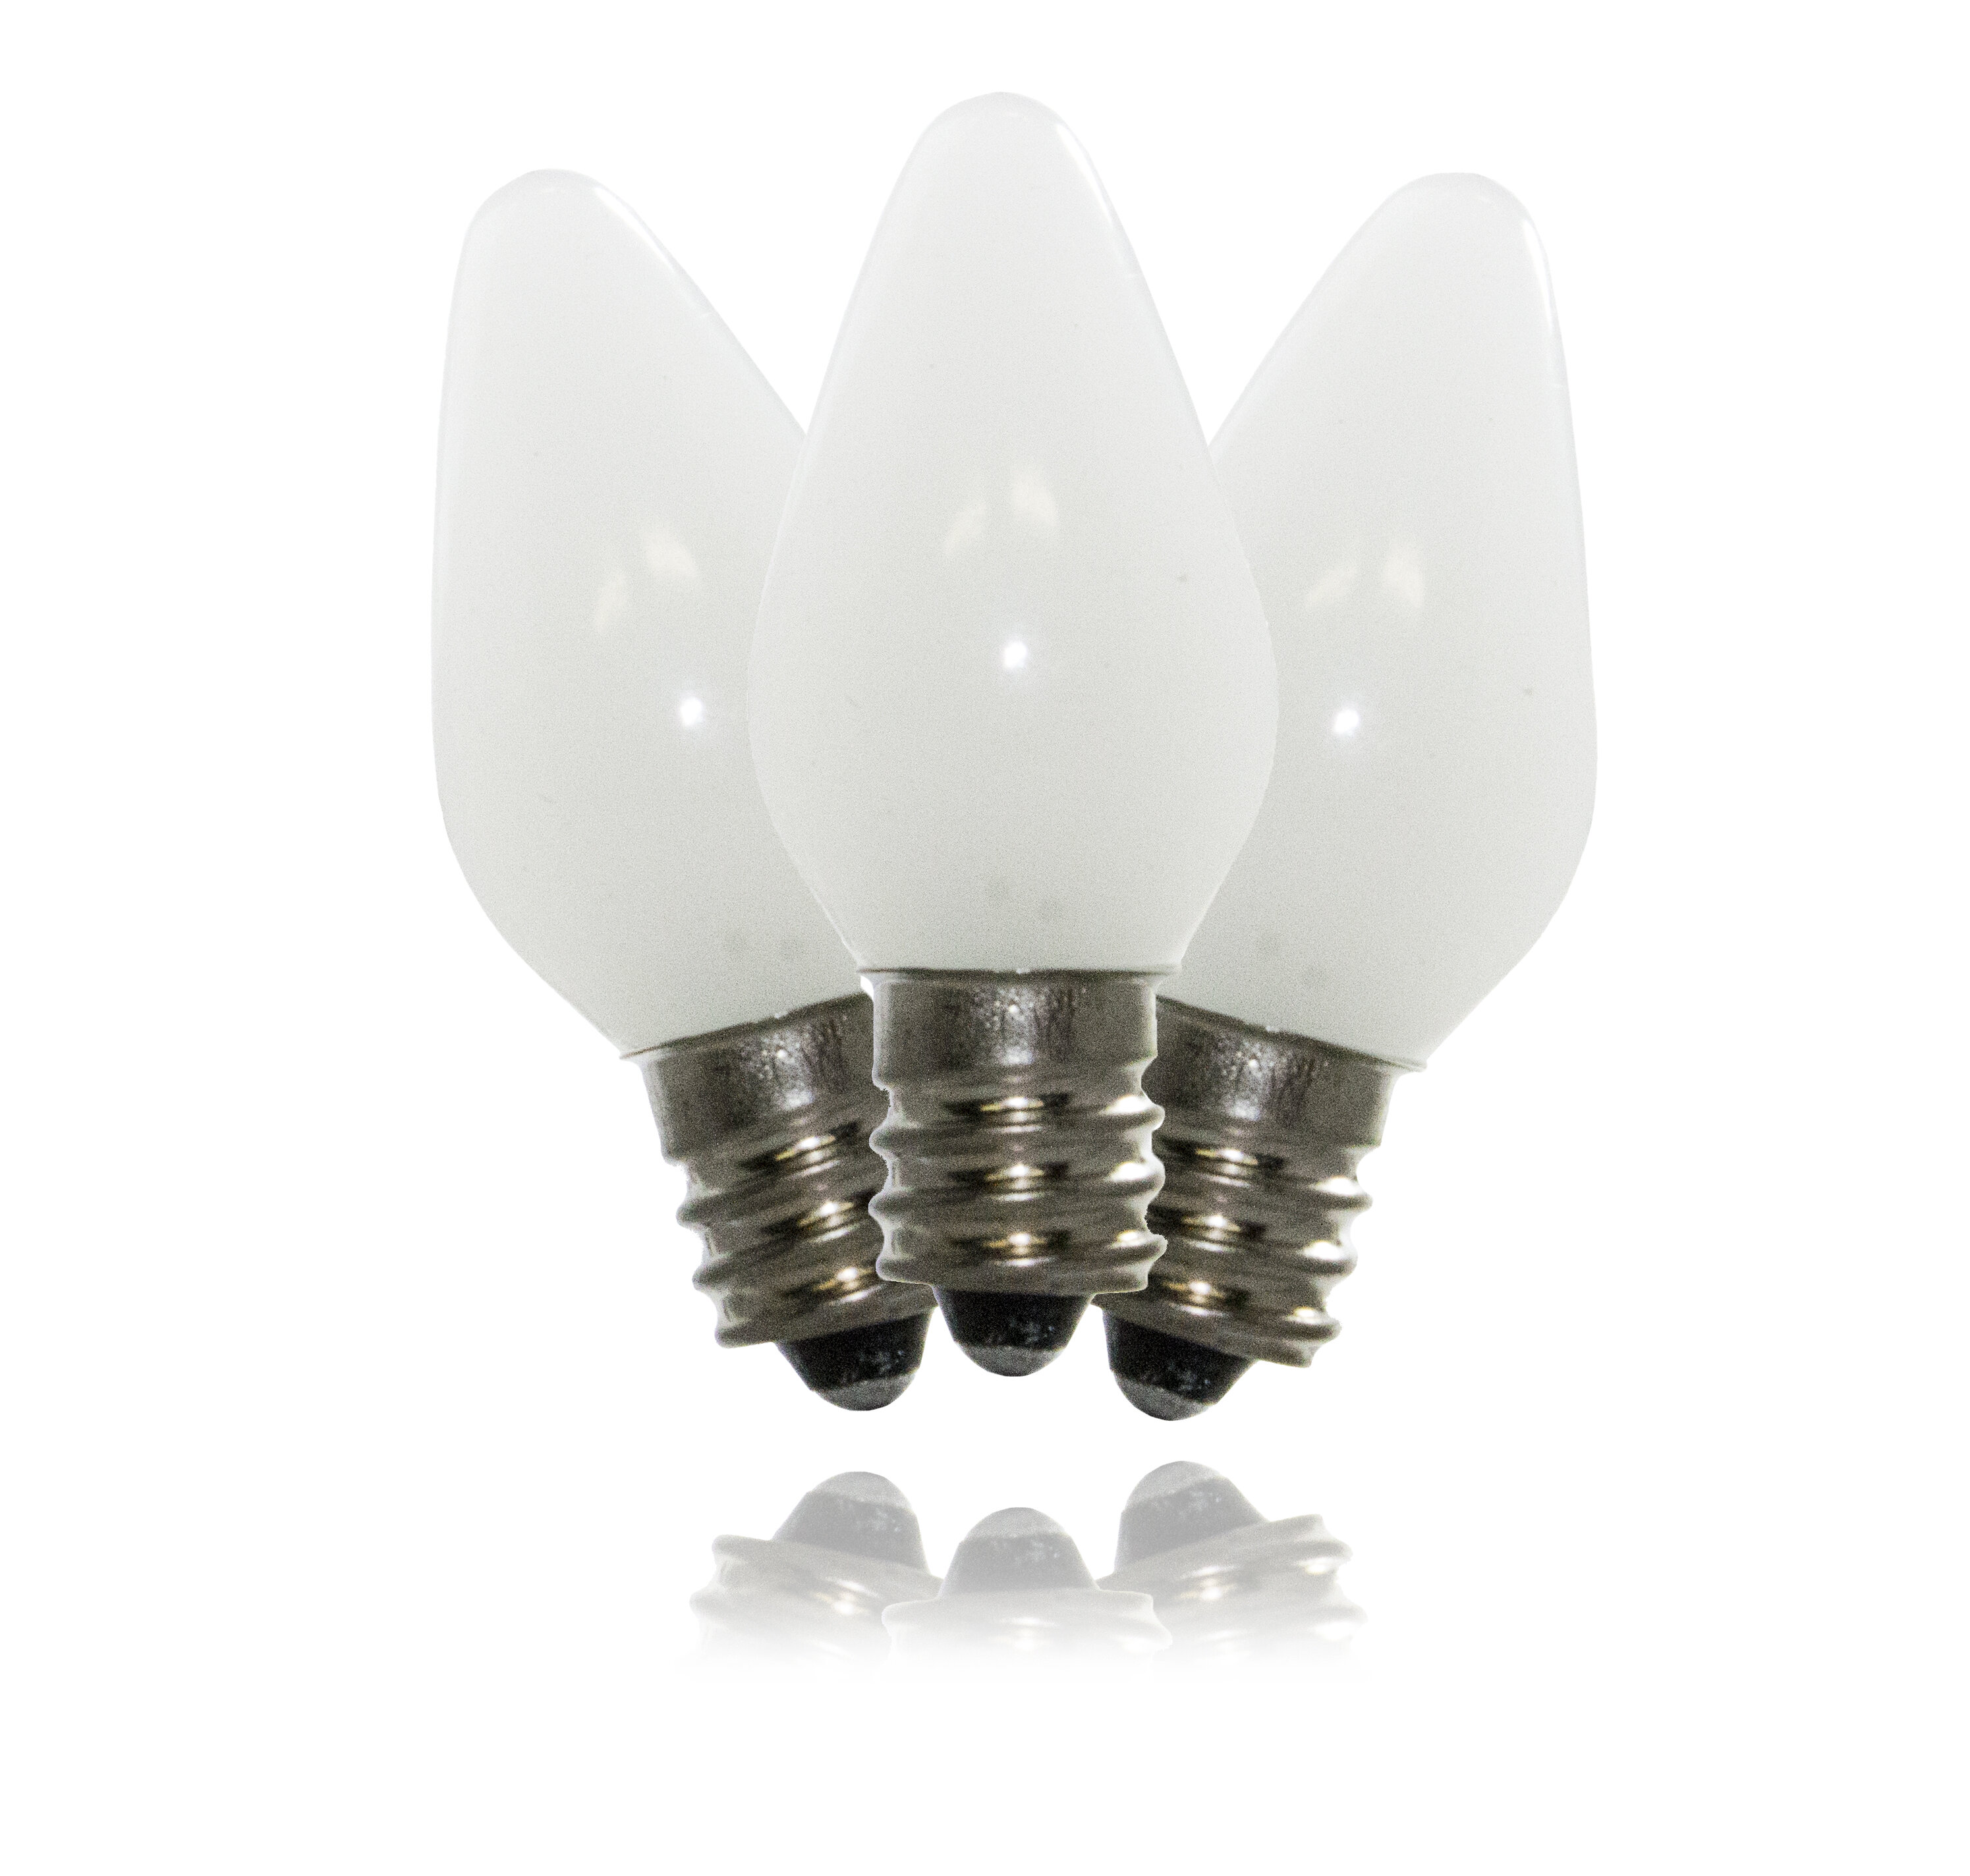 Set of 25 C7 Cold White LED Bulbs,2 SMD LEDs in Each Light Bulb,Christmas Decor